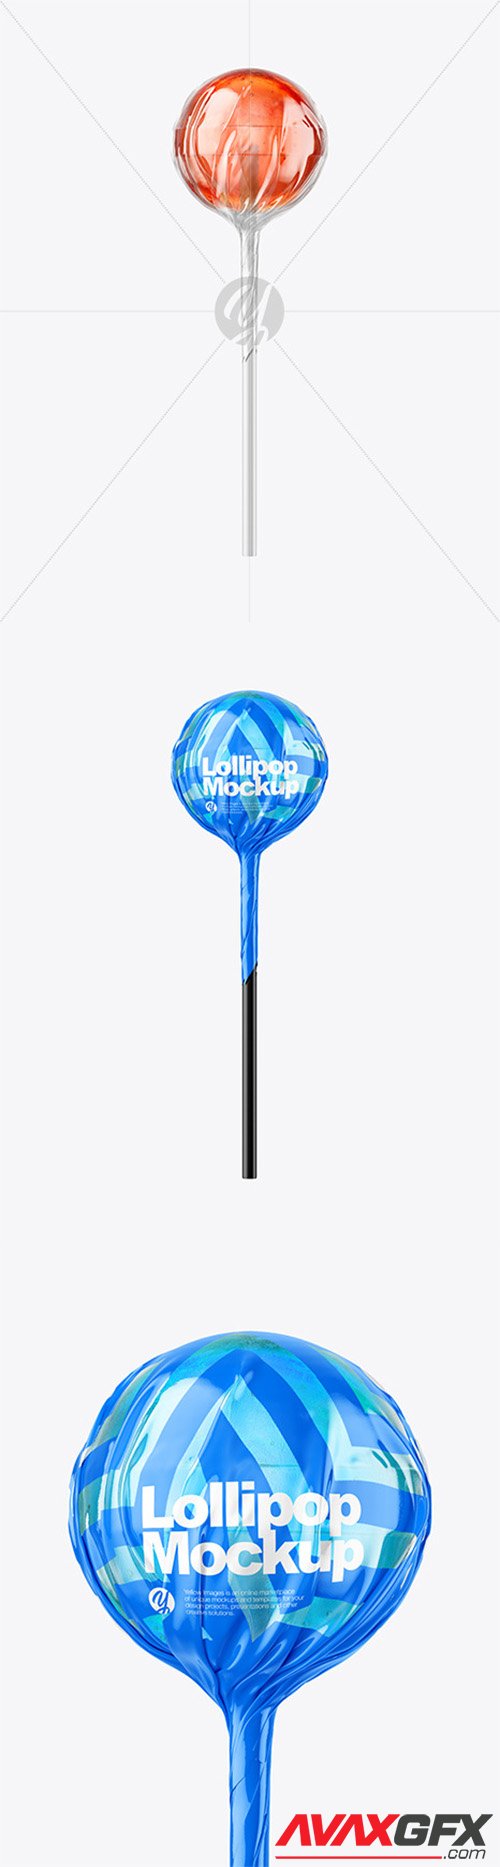 Ball Lollipop Mockup 60091